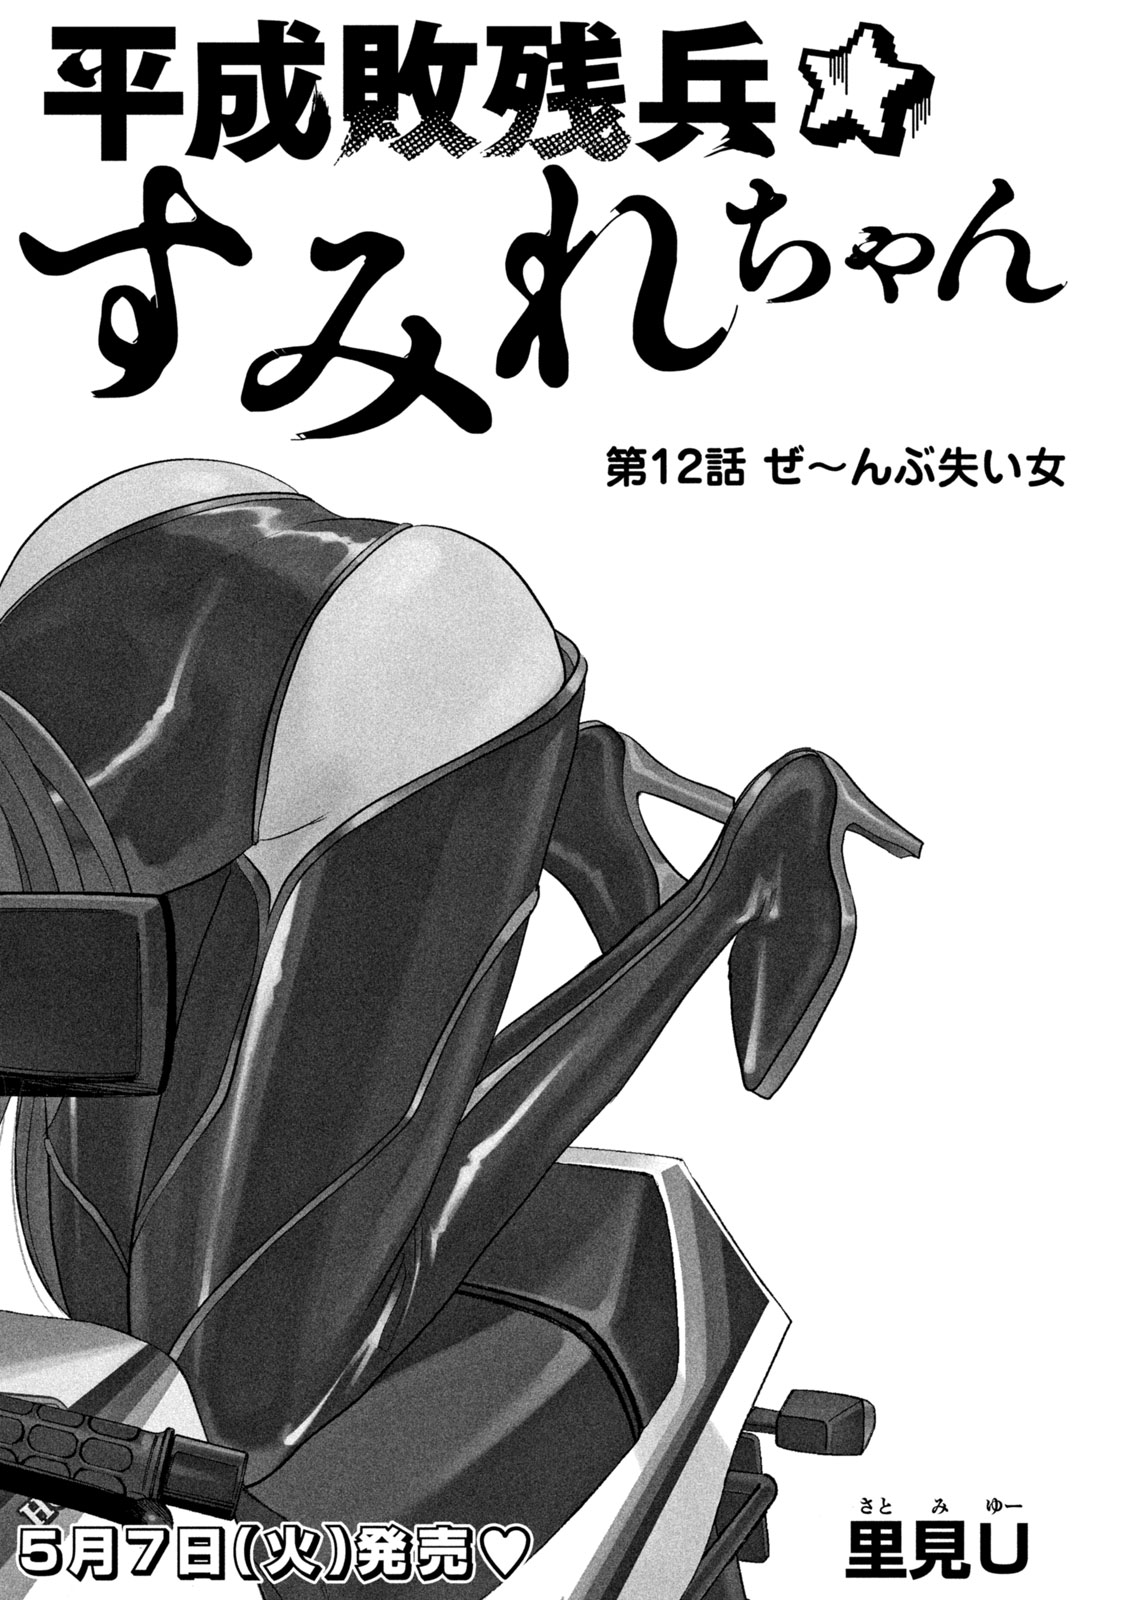 Heisei Haizanhei Sumire-chan - Chapter 12 - Page 2